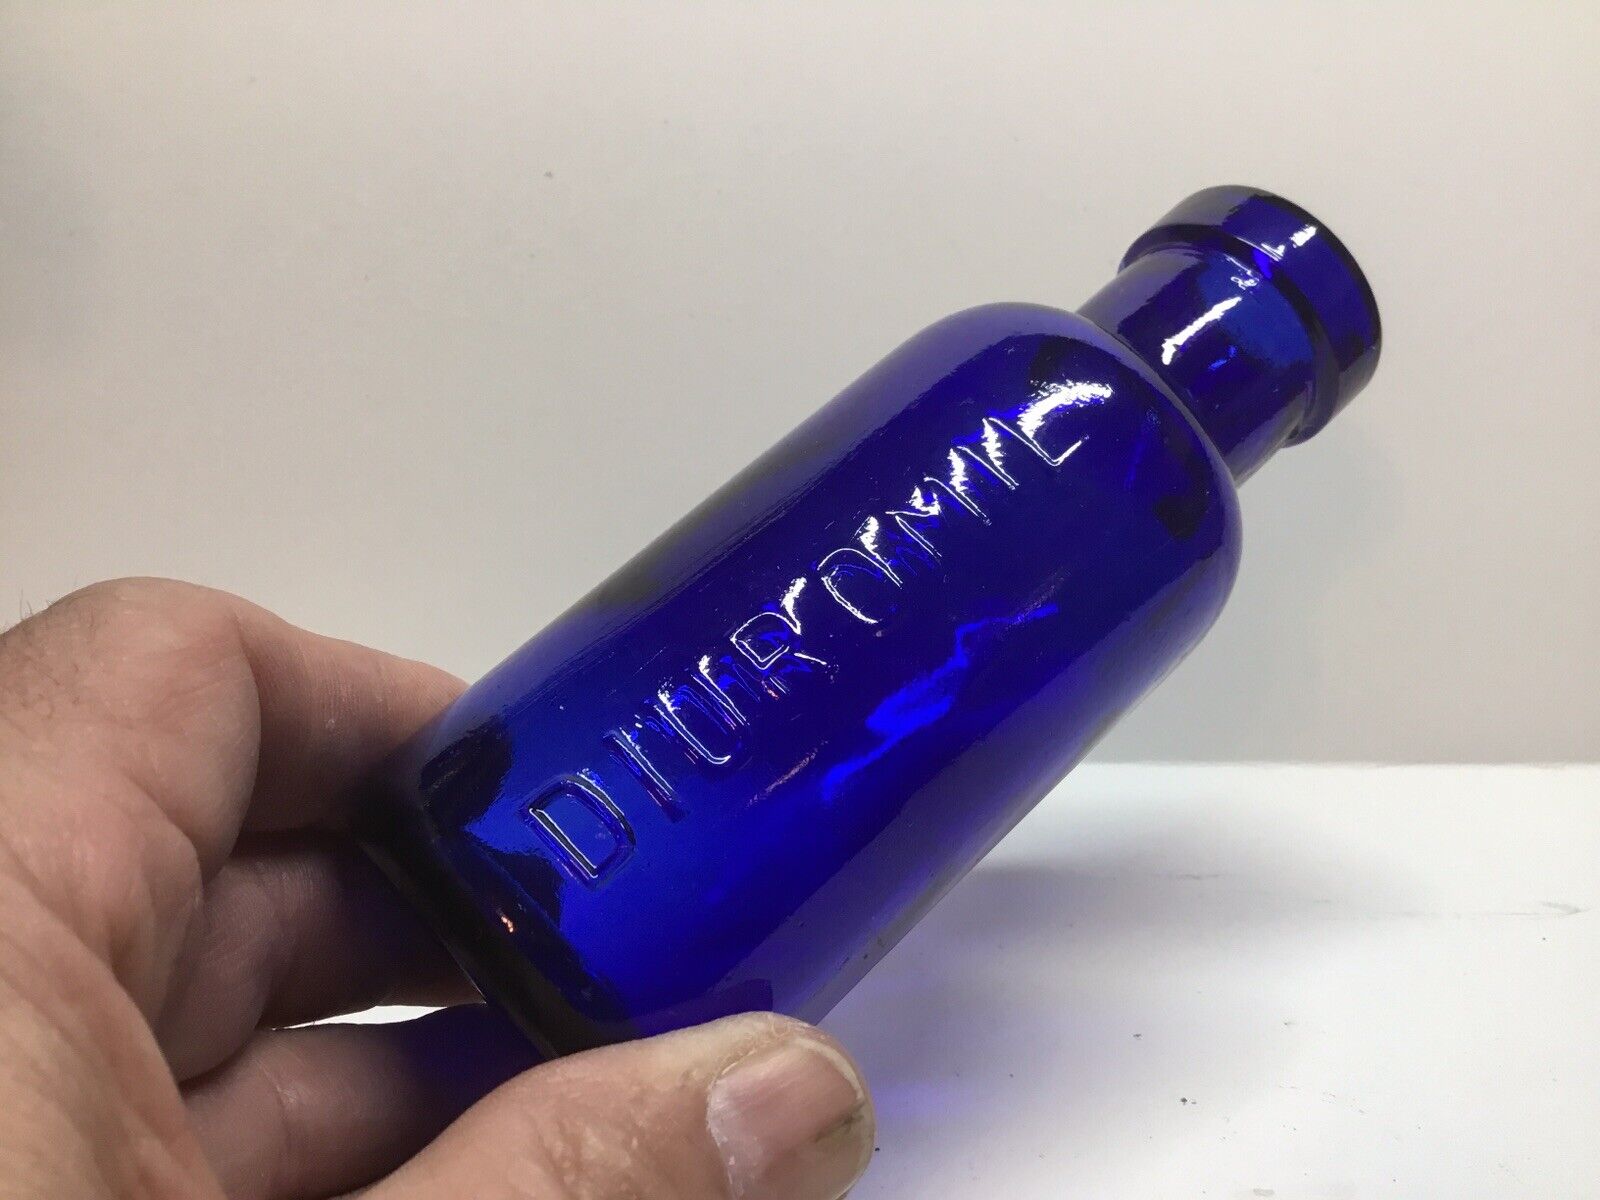 Round Antique Diuromil Cobalt Blue Medicine Bottle.